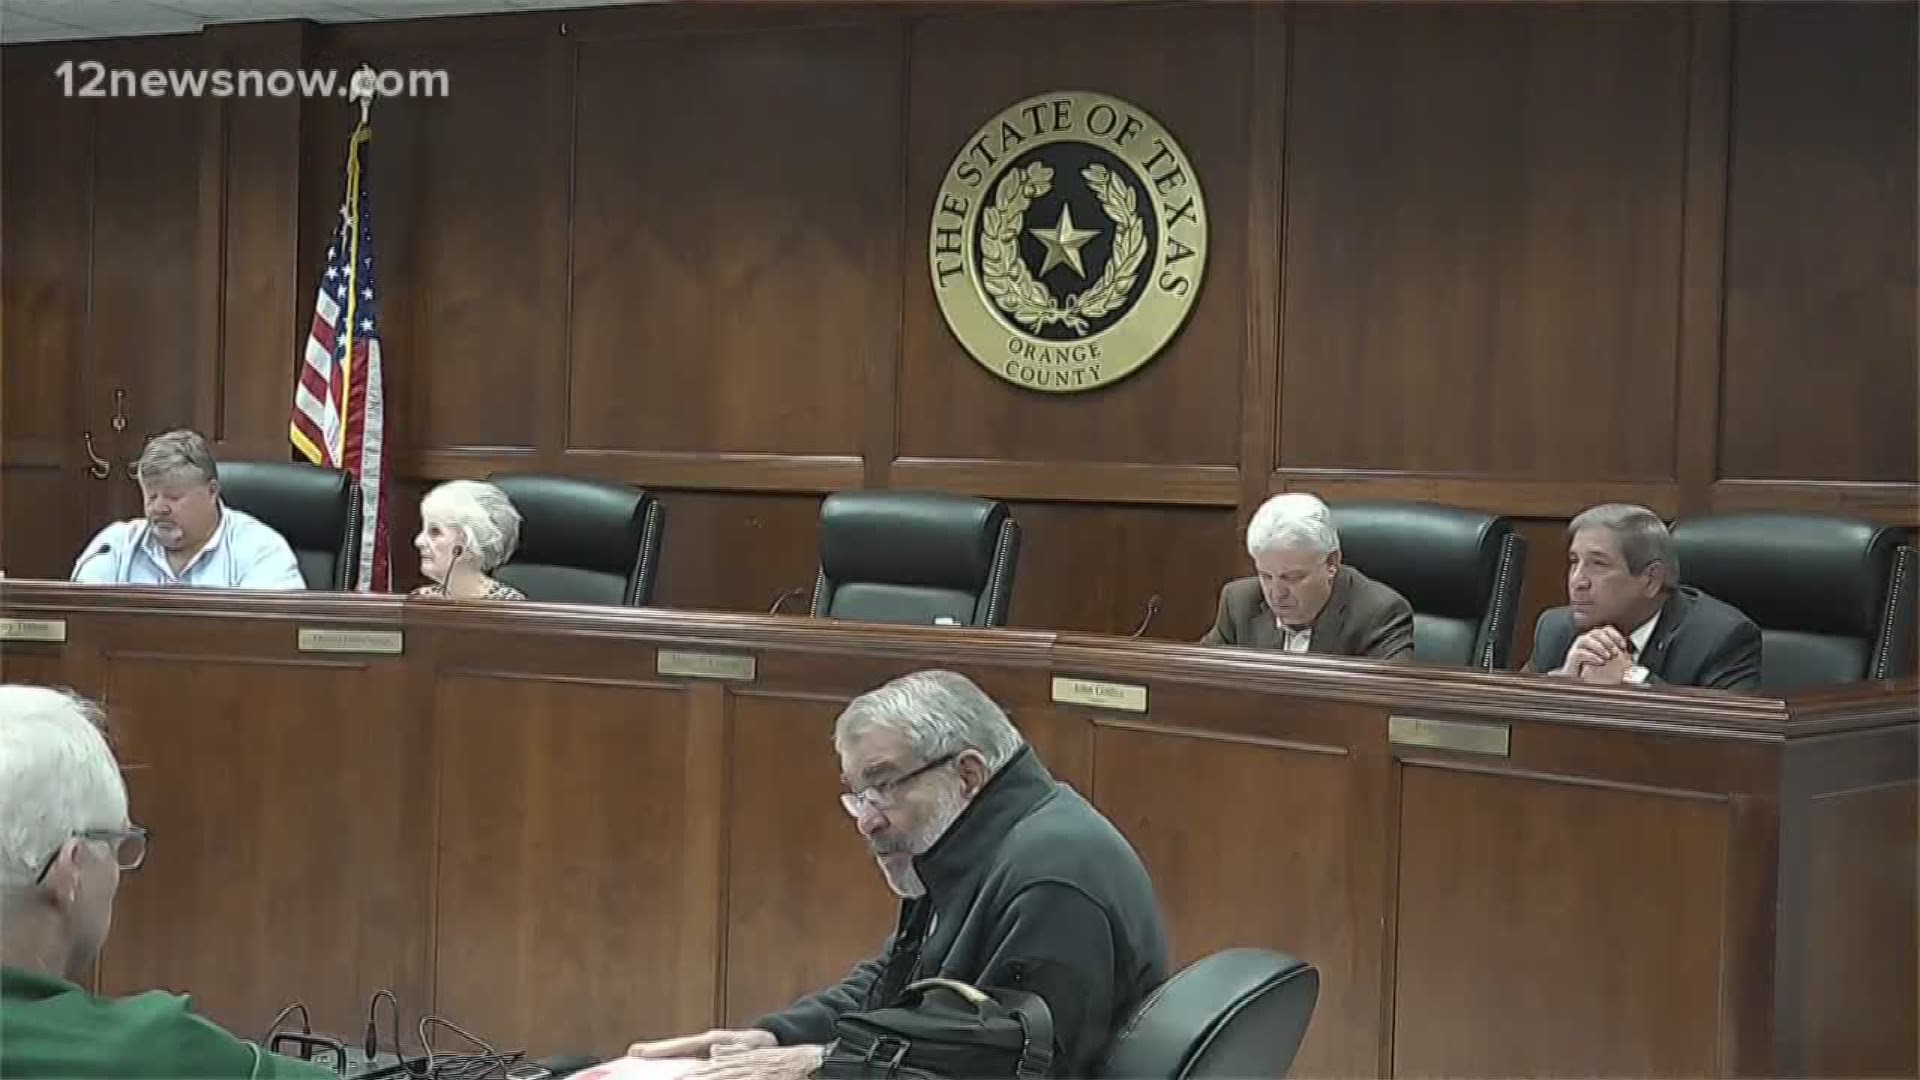 Judge Dean Crooks announced his resignation last week.